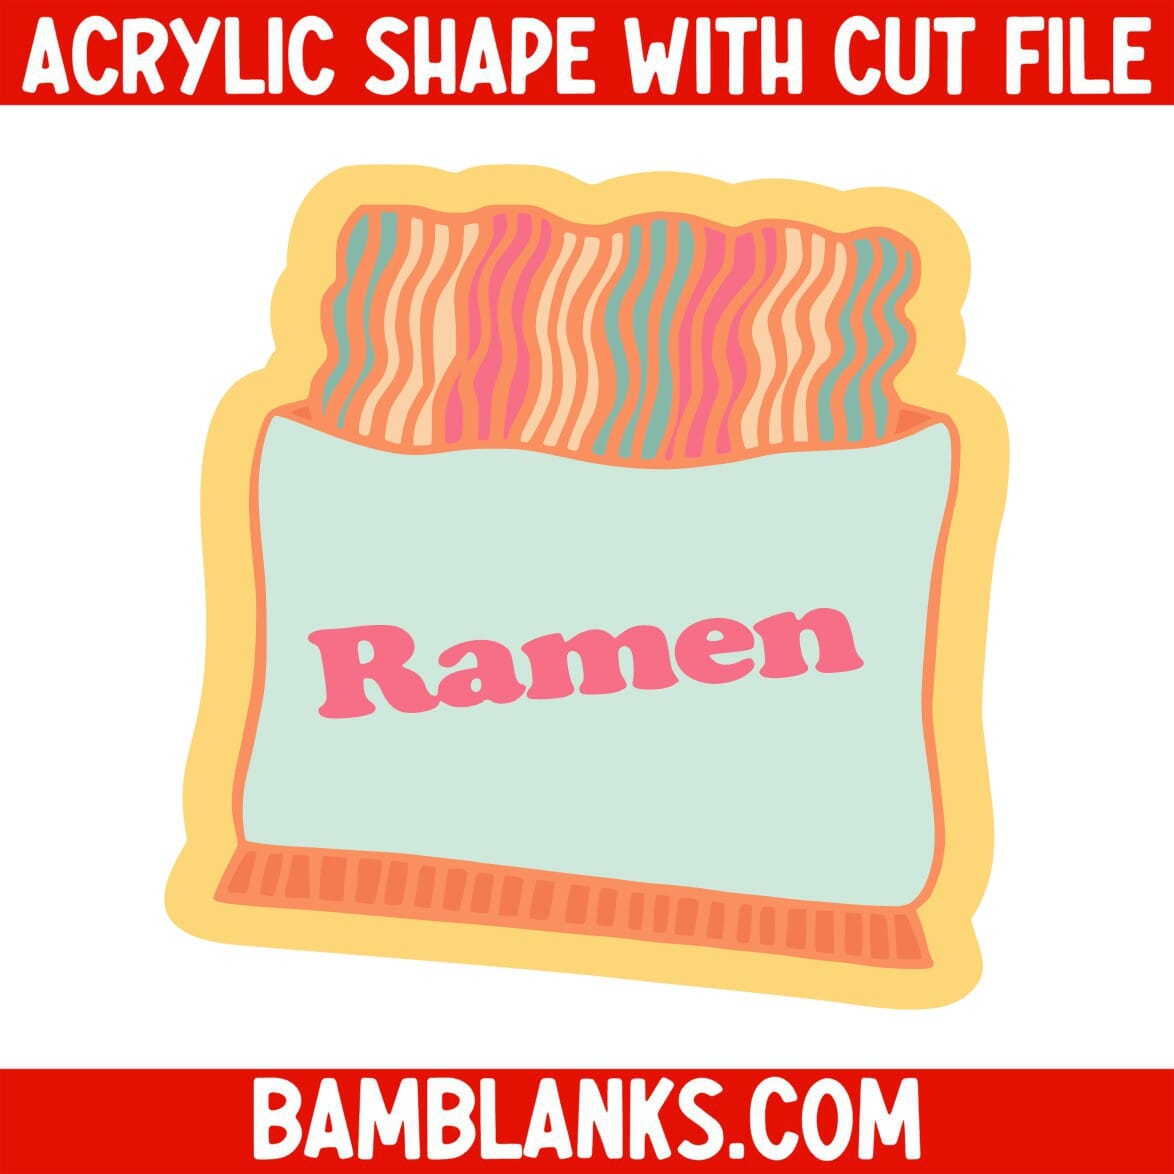 Ramen - Acrylic Shape #2046